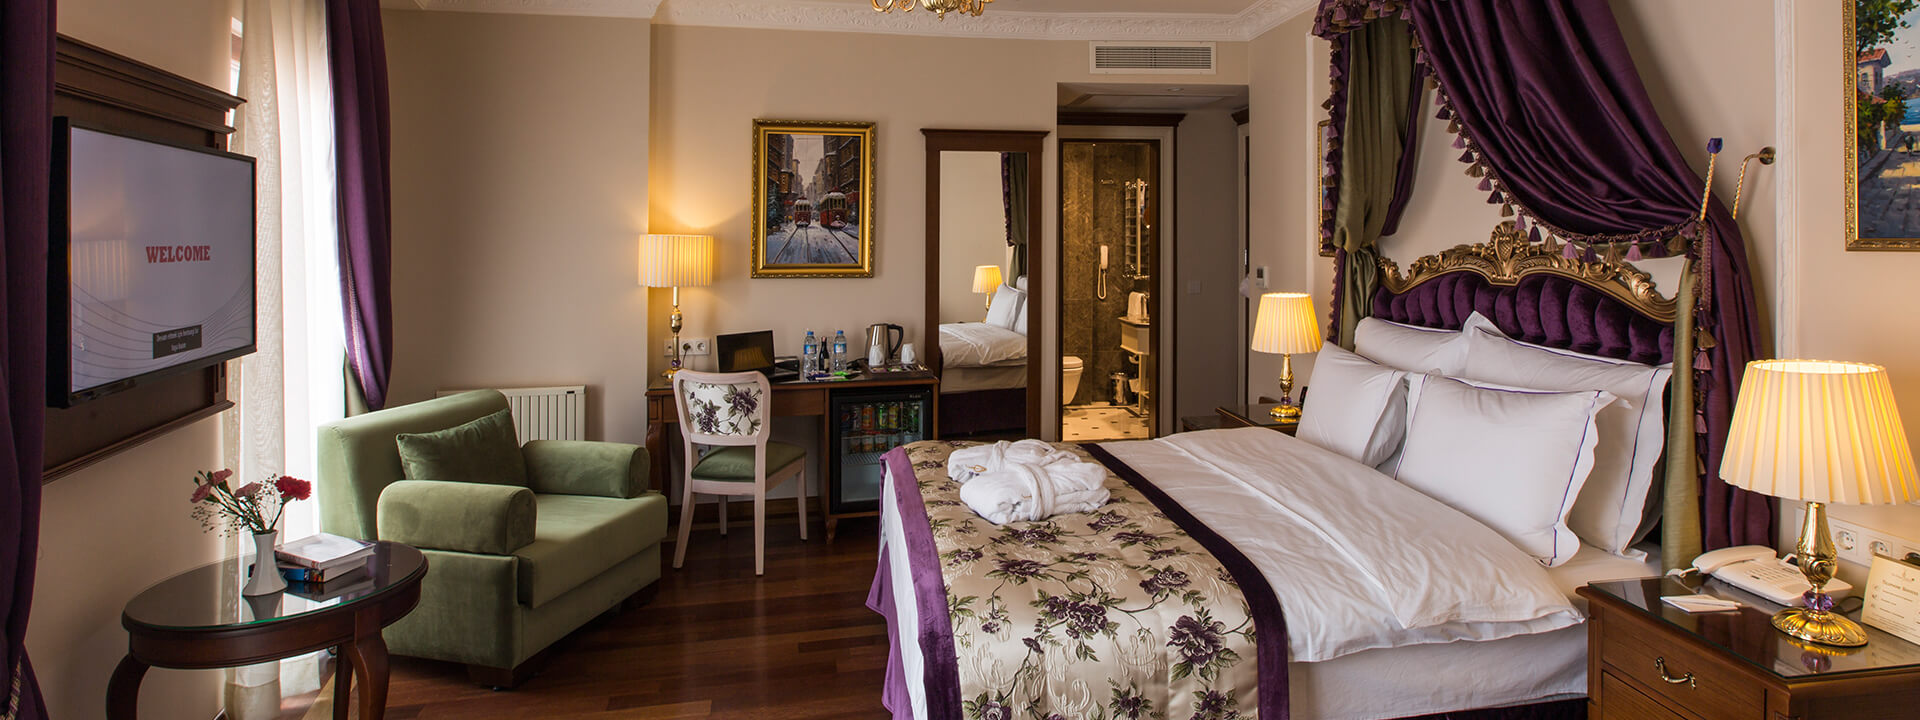 Discount [80% Off] Ayasofya Home Suites Turkey - Hotel ...